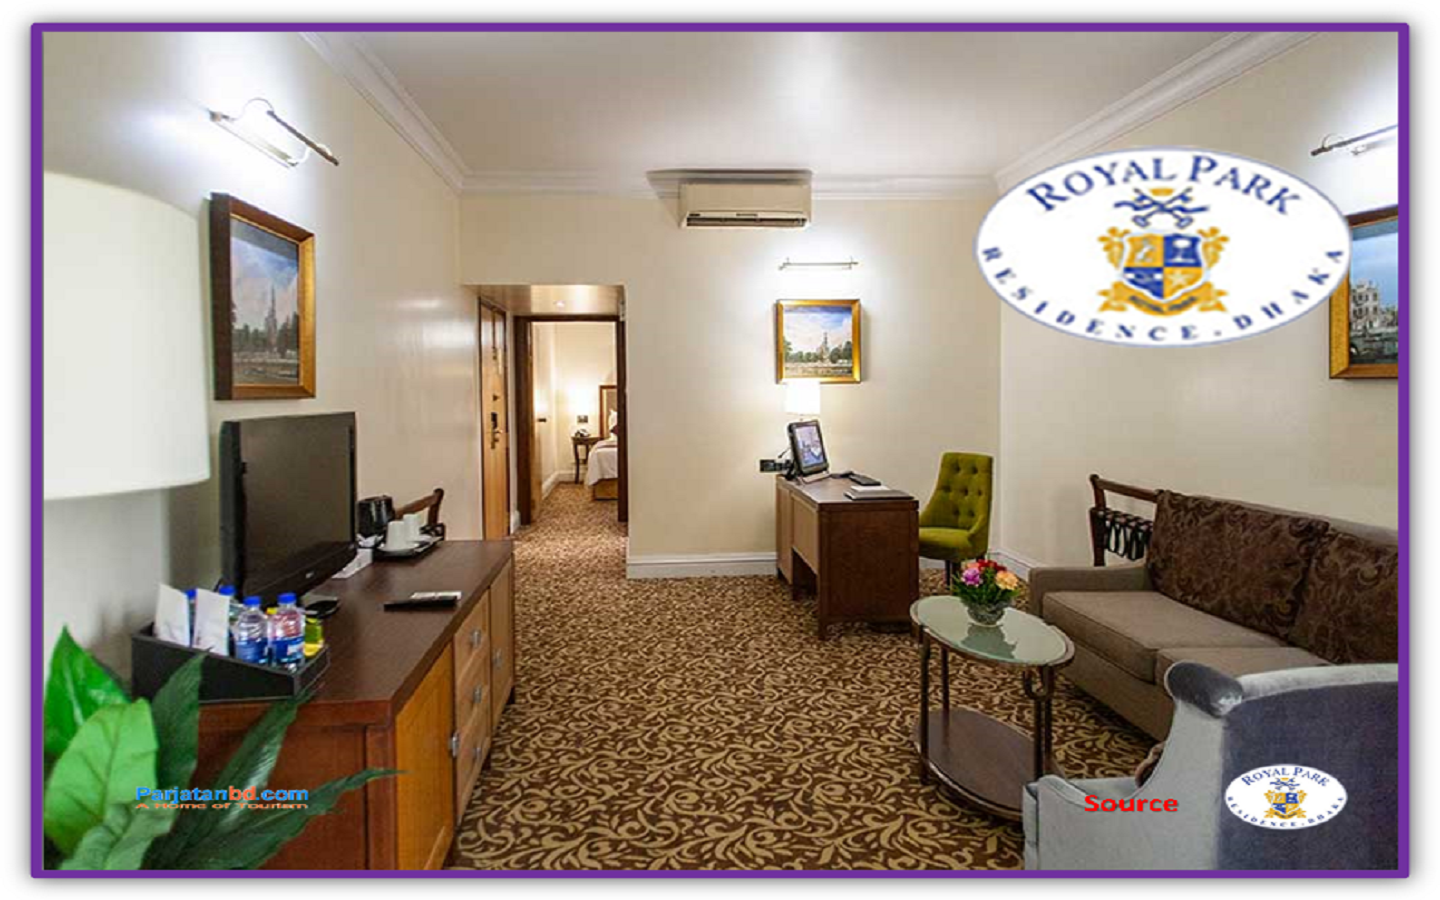 Room Suite Room  -1, Royal Park Residence Hotel, Banani